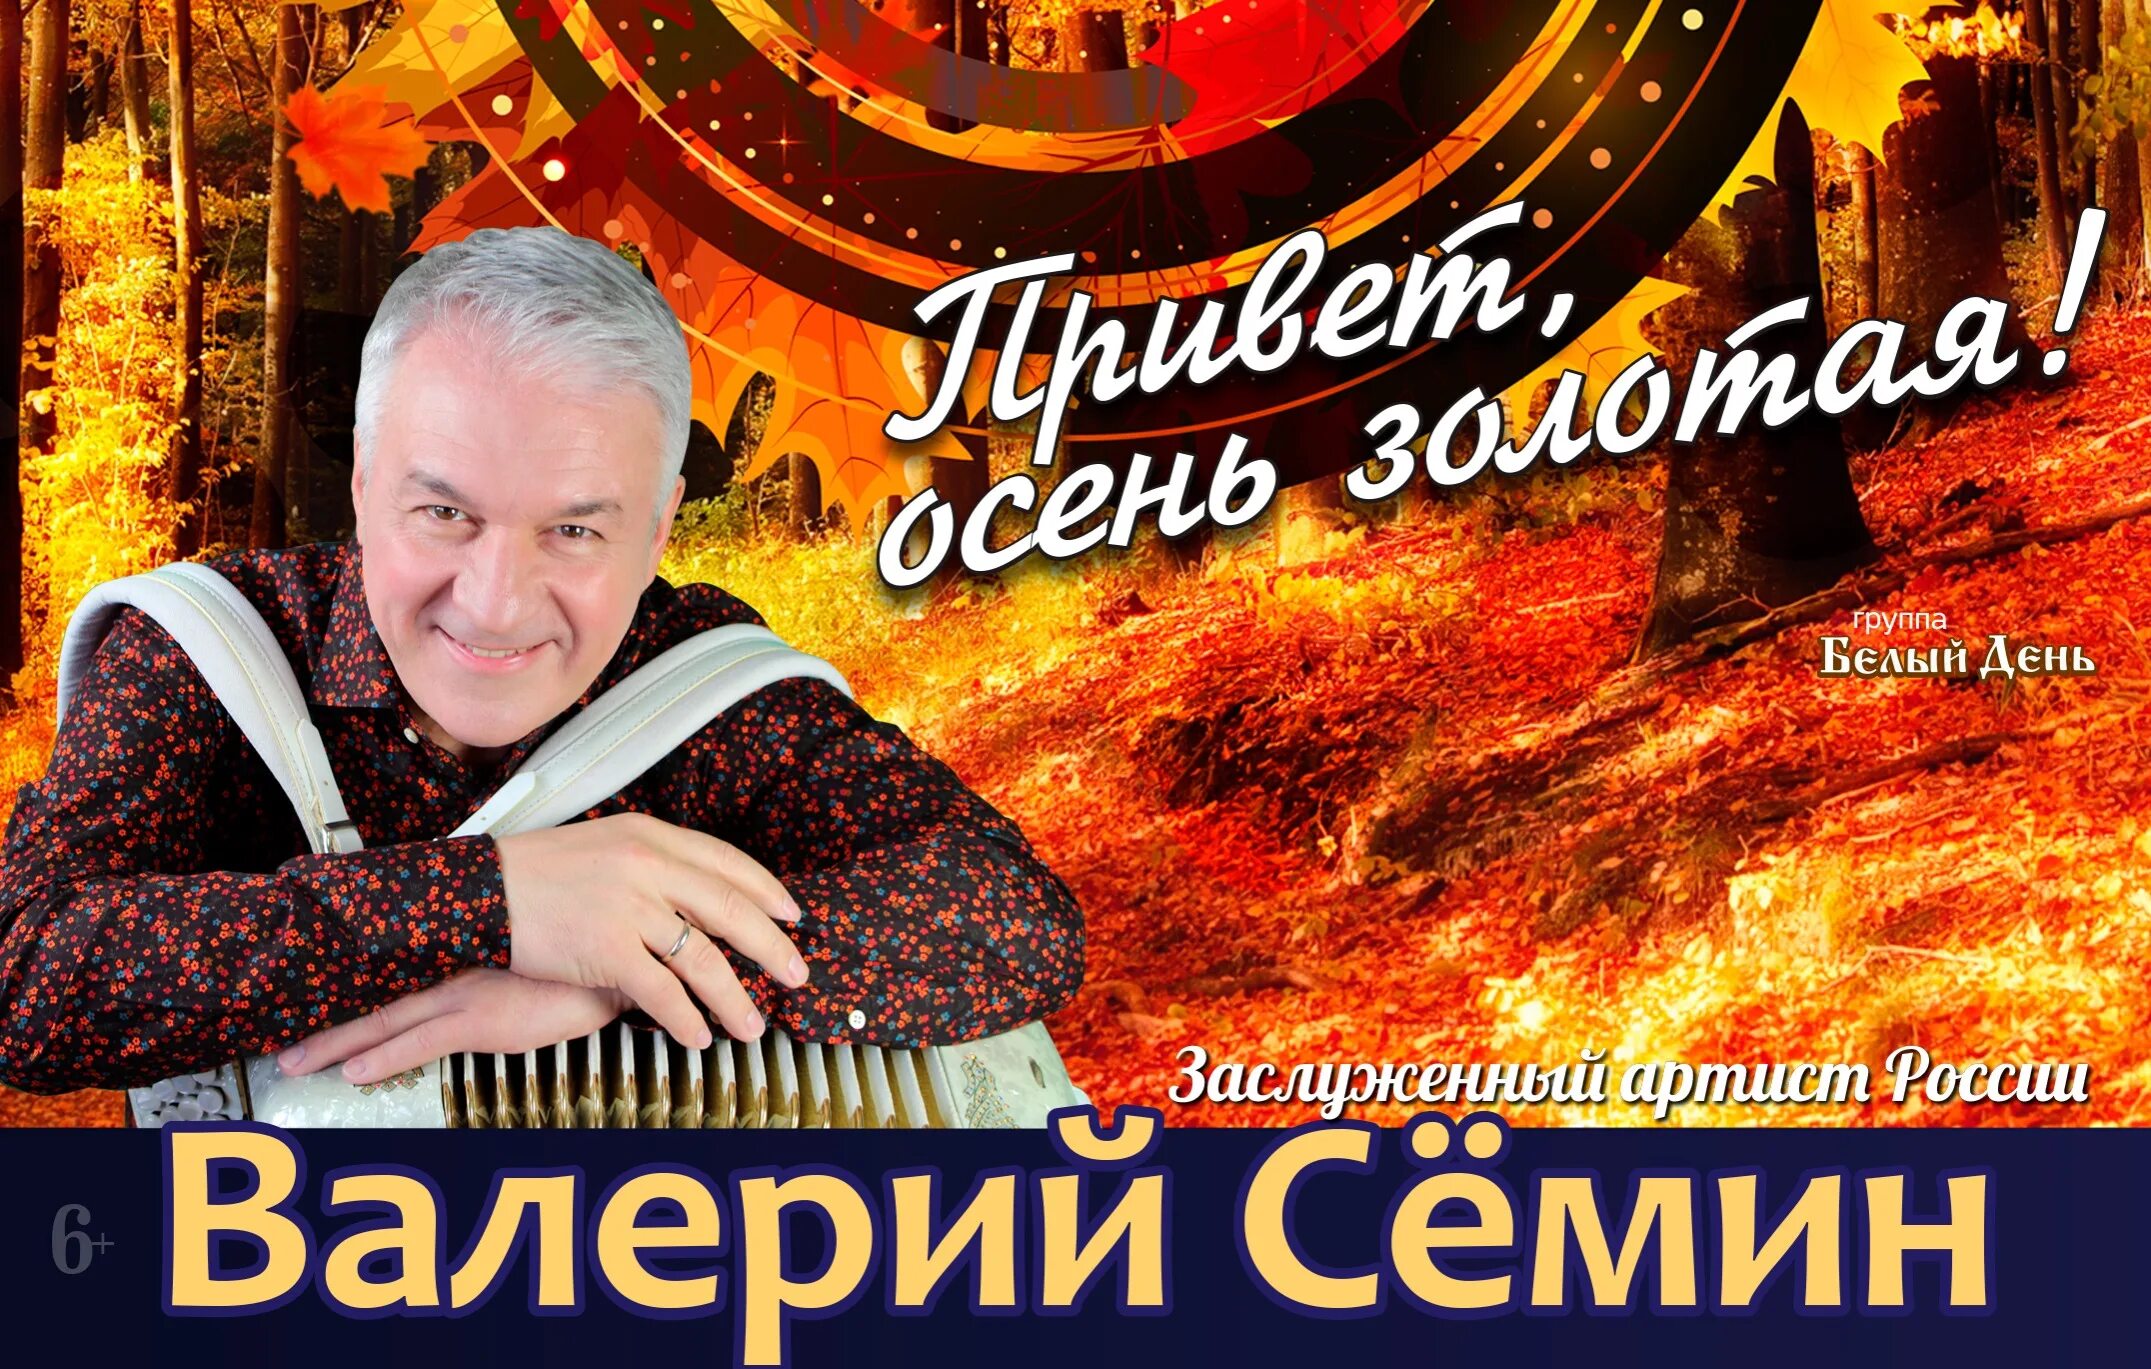 Семин ДК ГАЗ Нижний Новгород. Семин концерт. Концерт семина во владимире купить билет